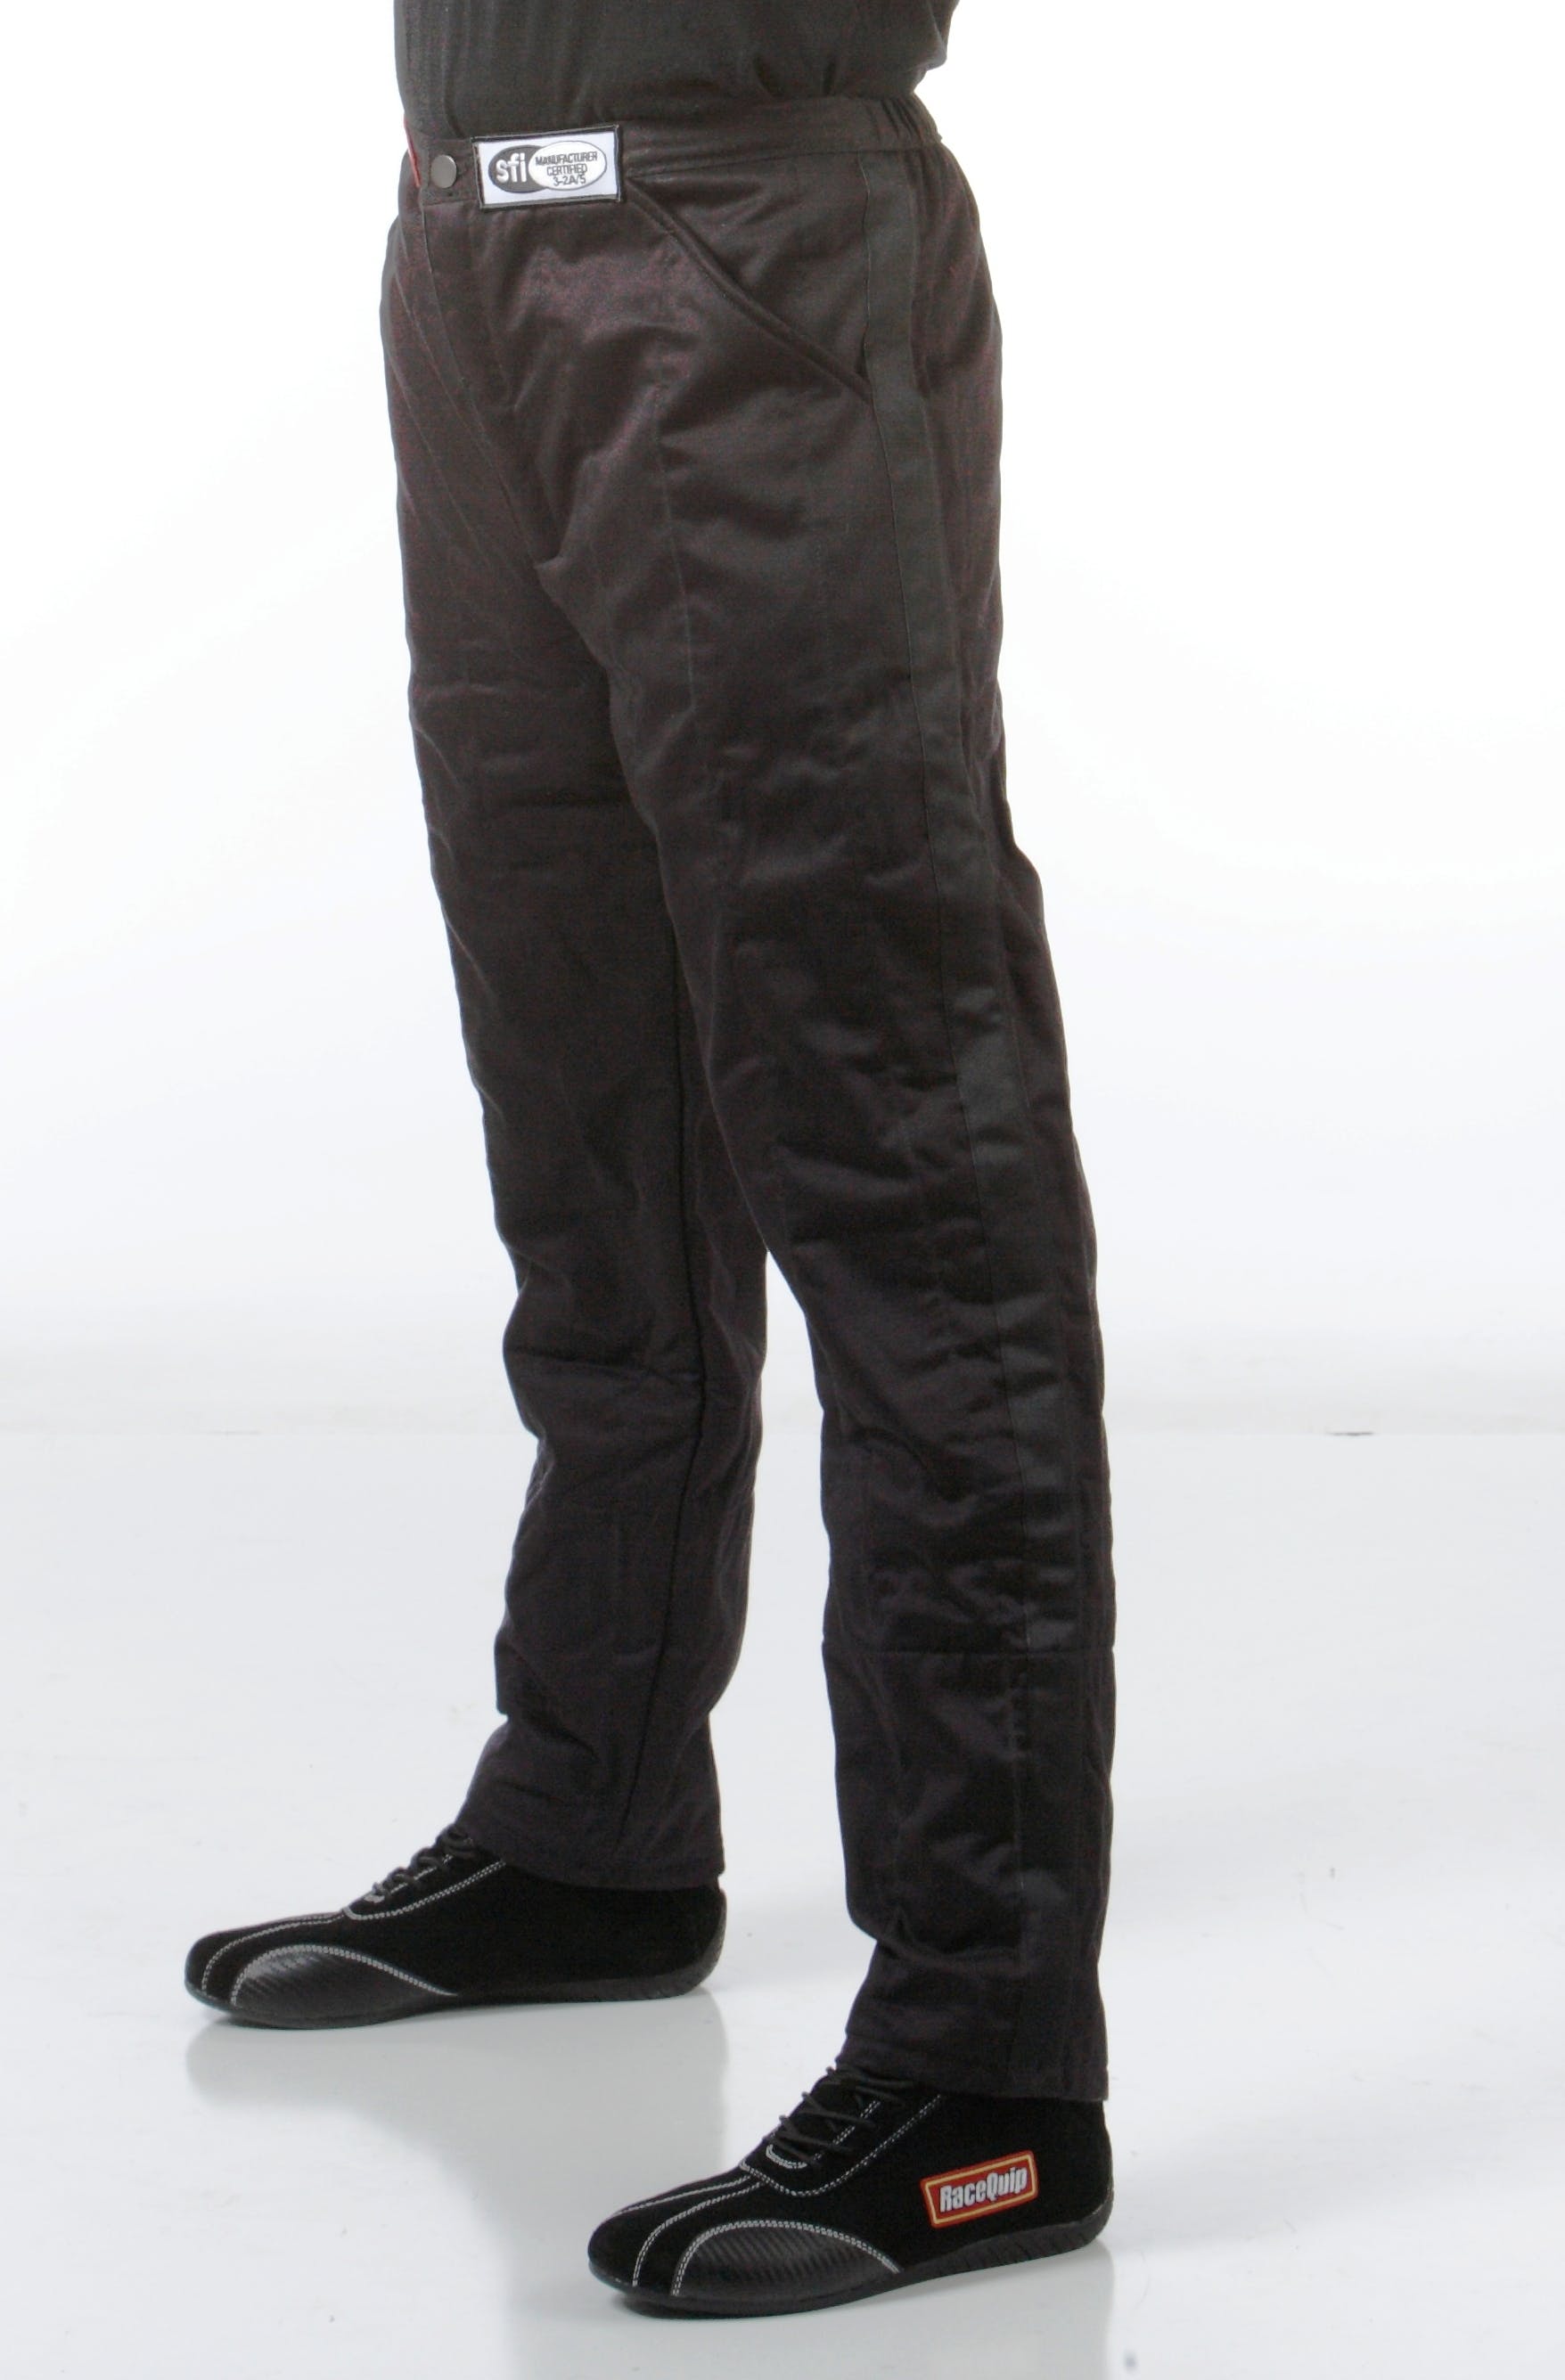 RaceQuip 122005 SFI-5 Pyrovatex Multi-Layer Racing Fire Pants (Black, Large)